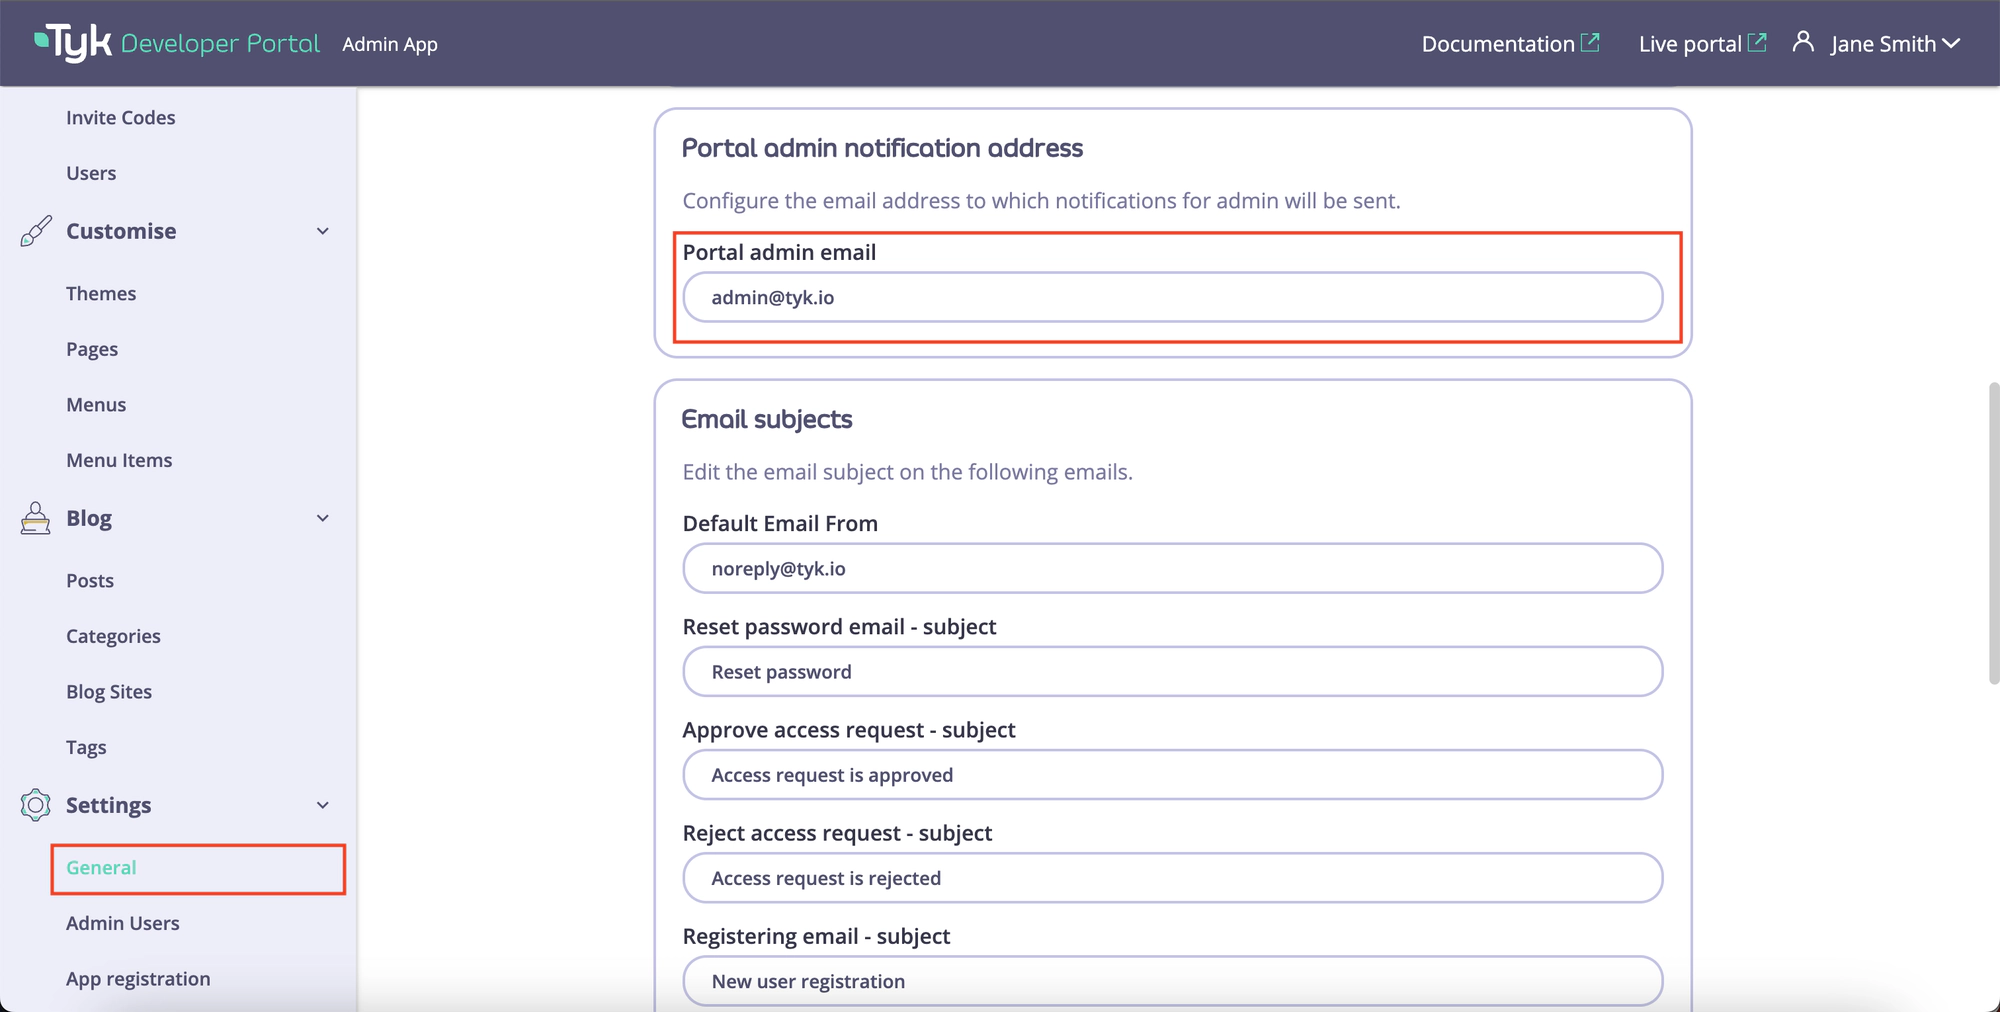 Portal admin notification address settings